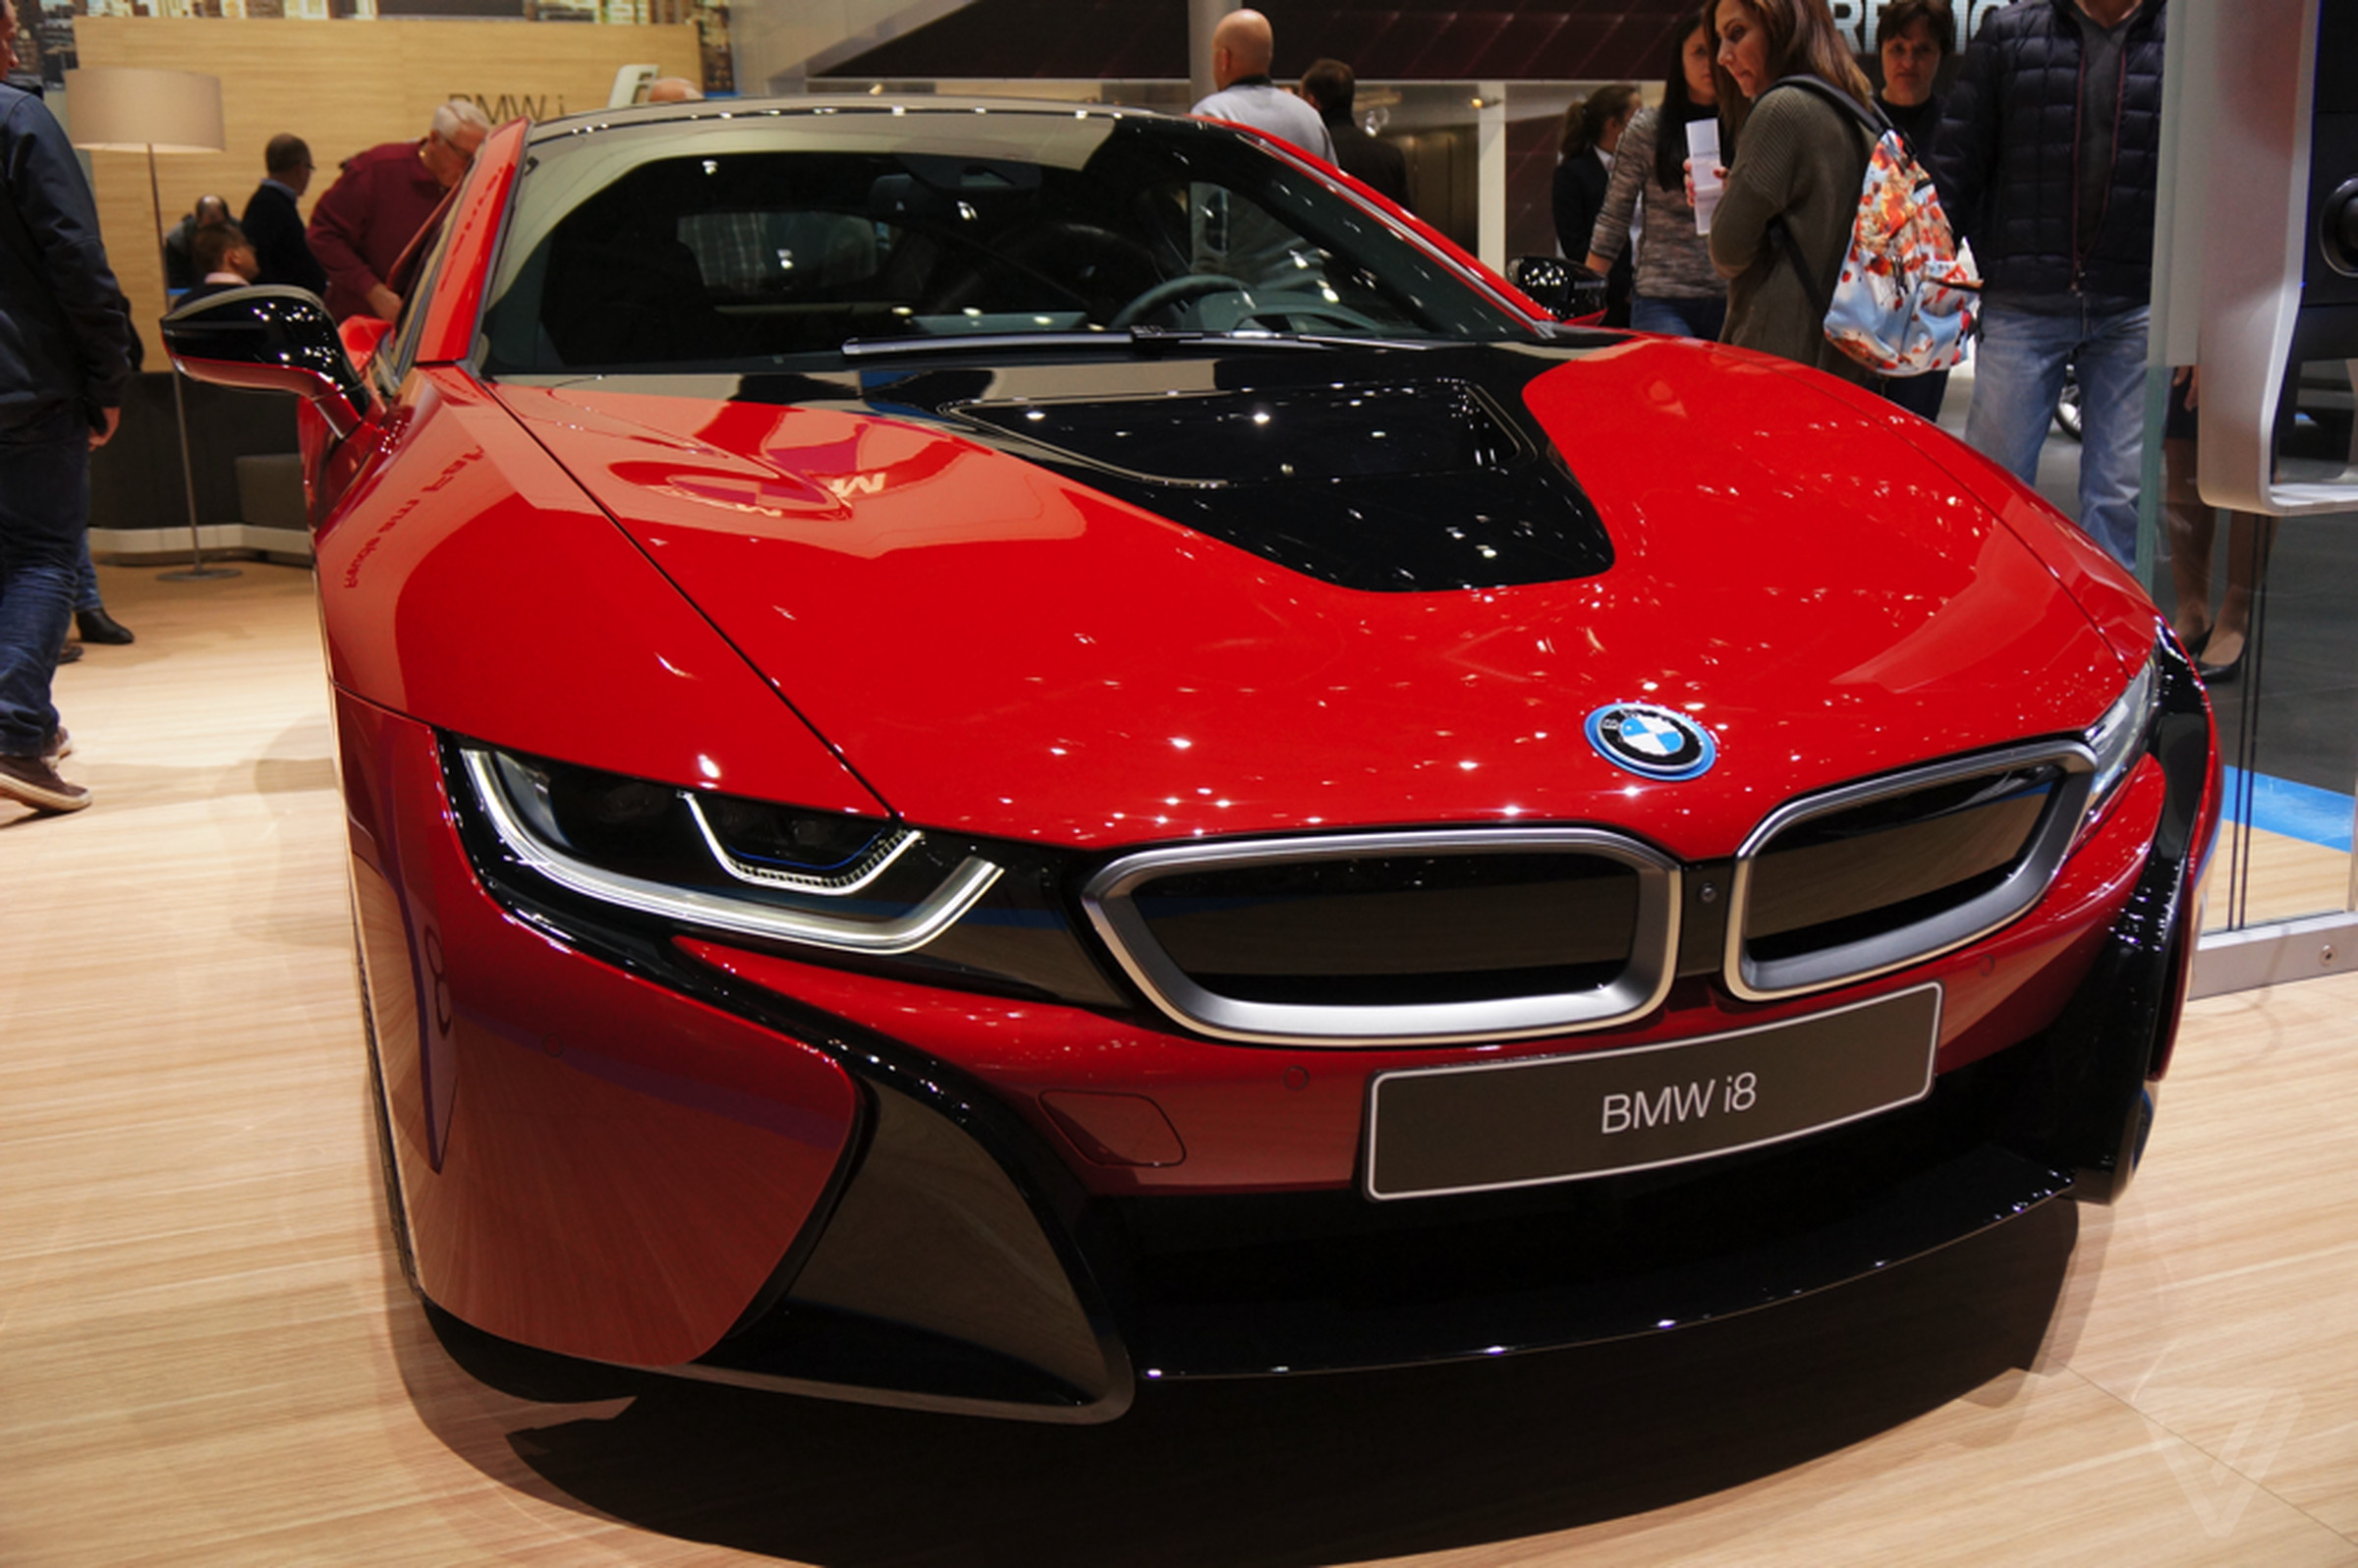 BMW i8 Protonic Red at Geneva 2016